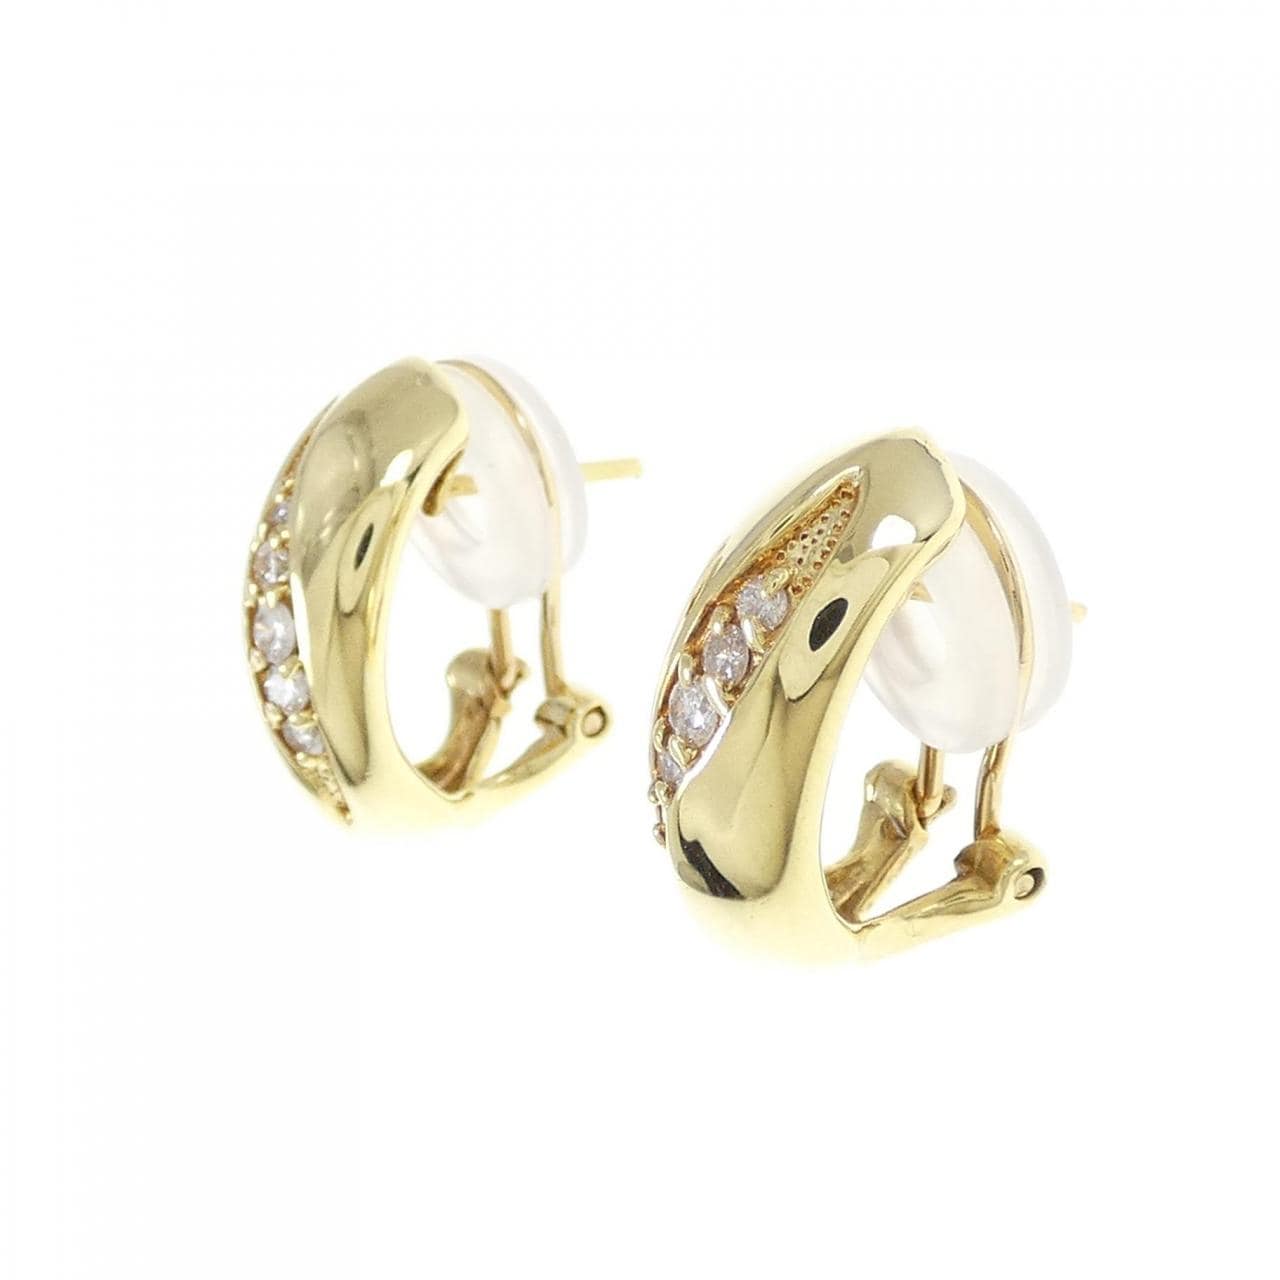 K18YG Diamond earrings/earrings 0.2CT